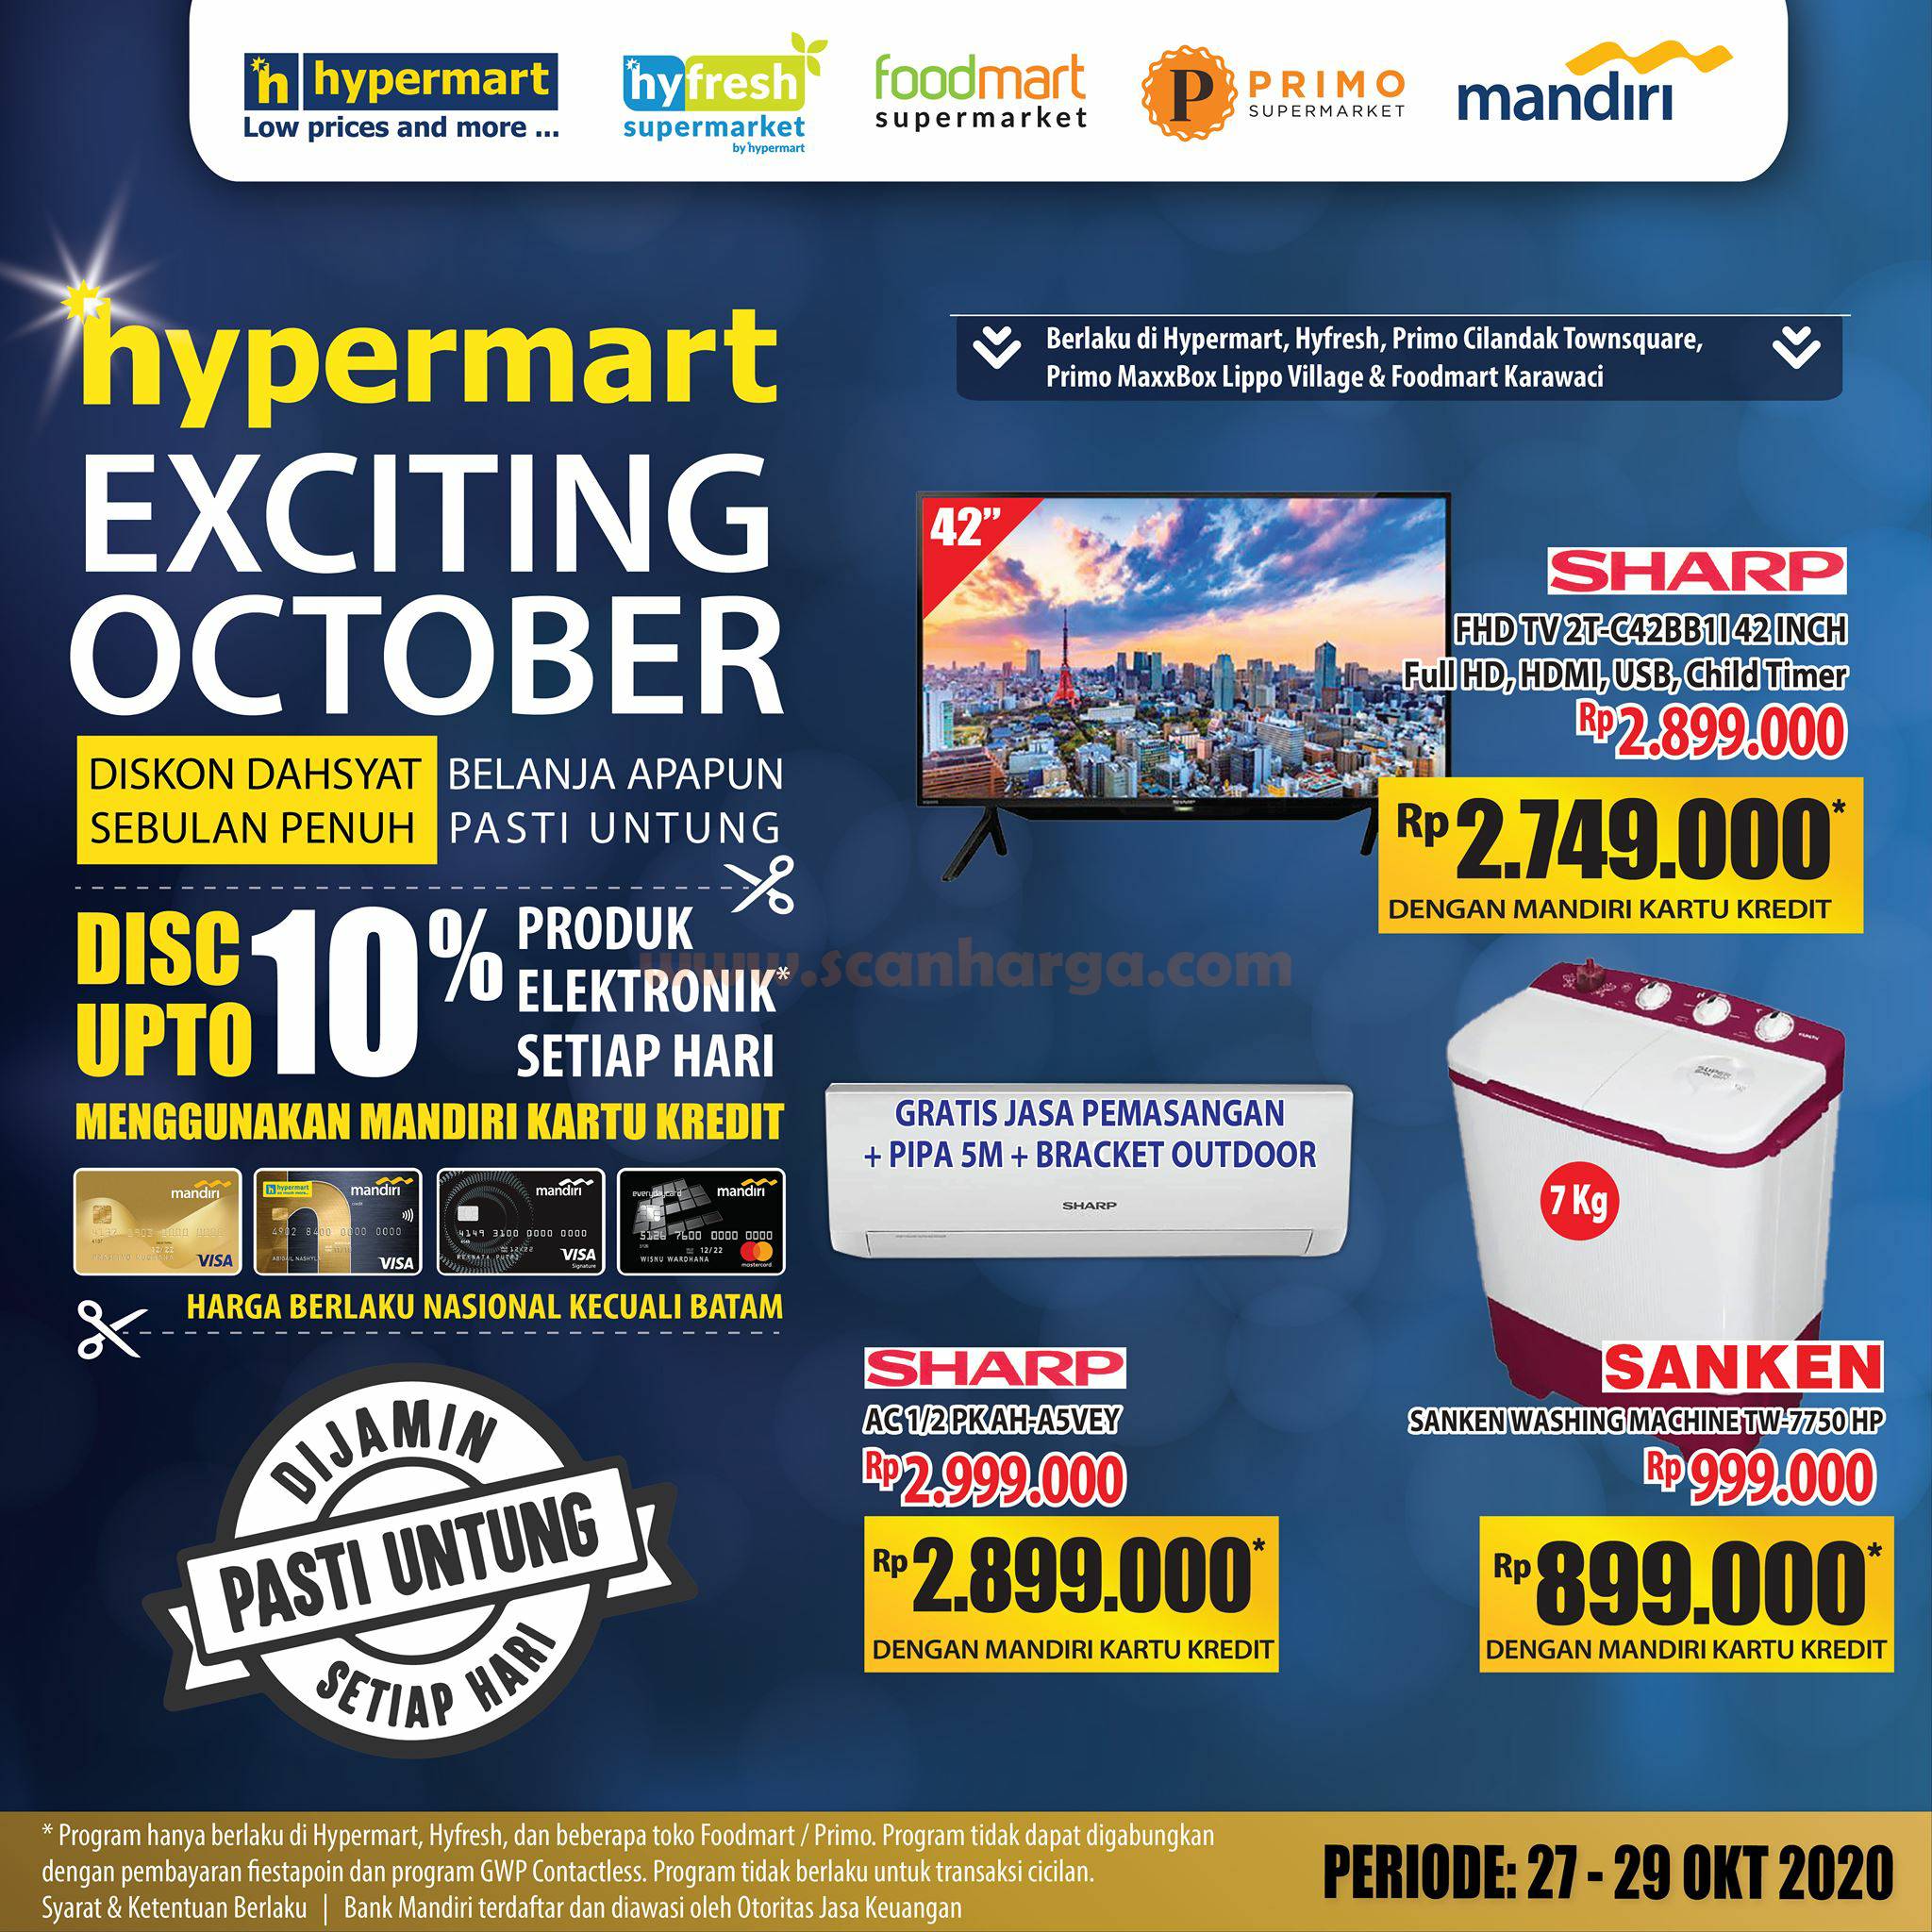 Promo Hypermart Exciting Oktober Diskon 10% produk Elektronik dengan Kartu Kredit Mandiri